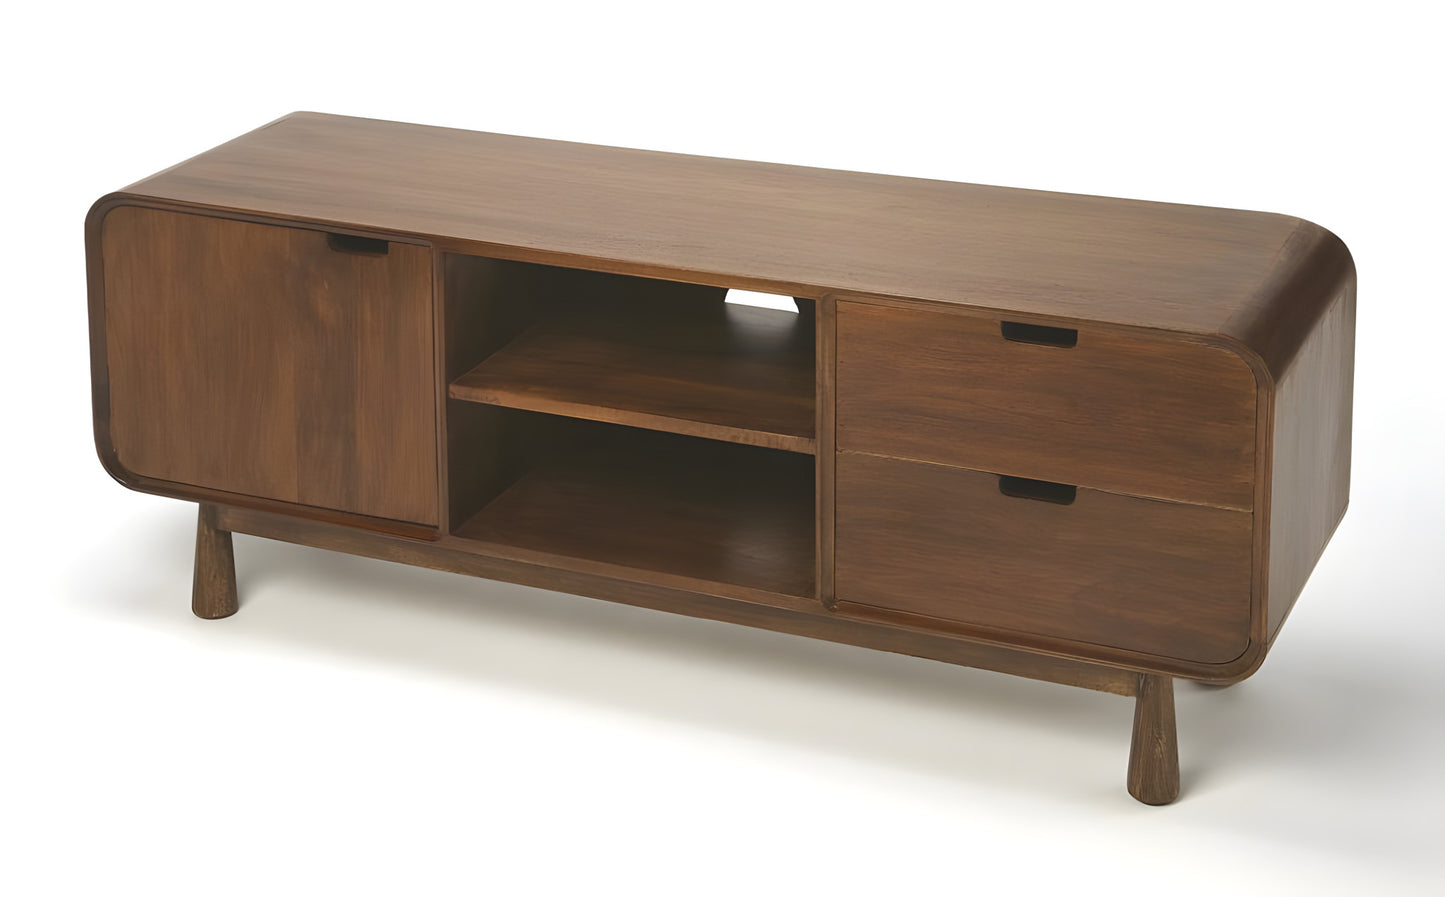 50" Medium Brown Wood Curved Edge Enclosed Storage TV Stand